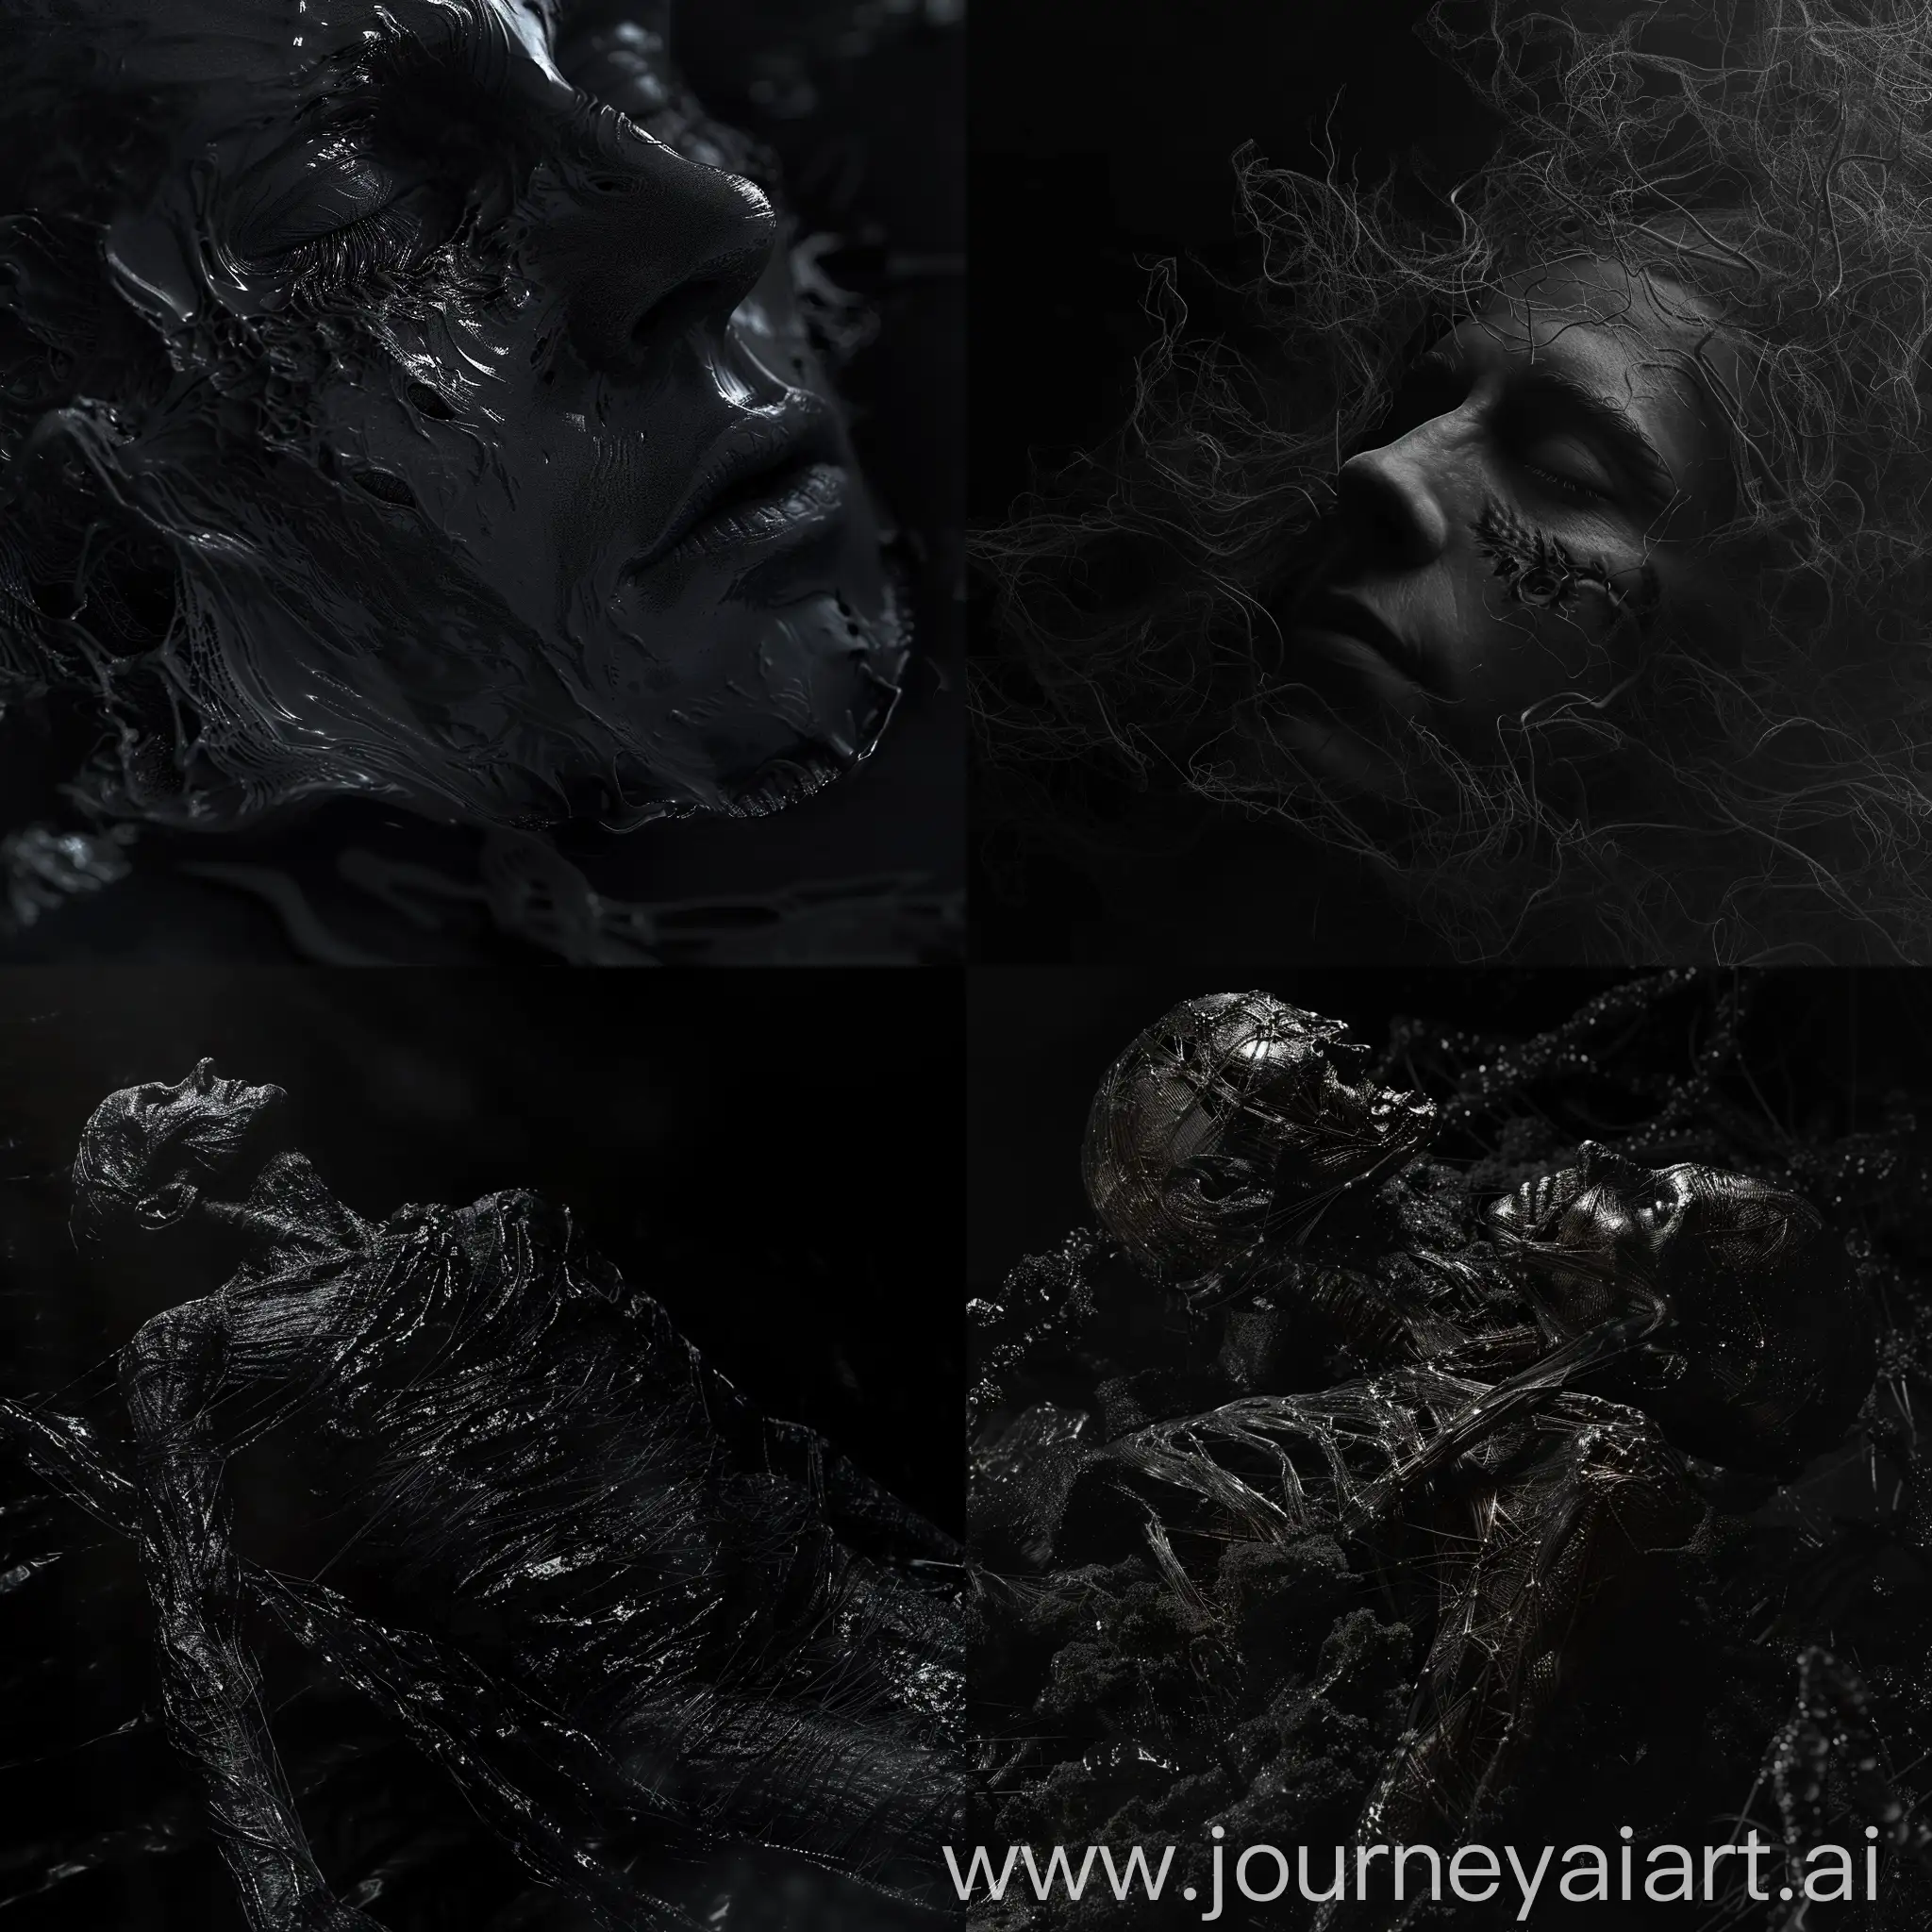 Ethereal-Encounter-Ghostly-Surrealism-in-Detailed-Dark-Tones